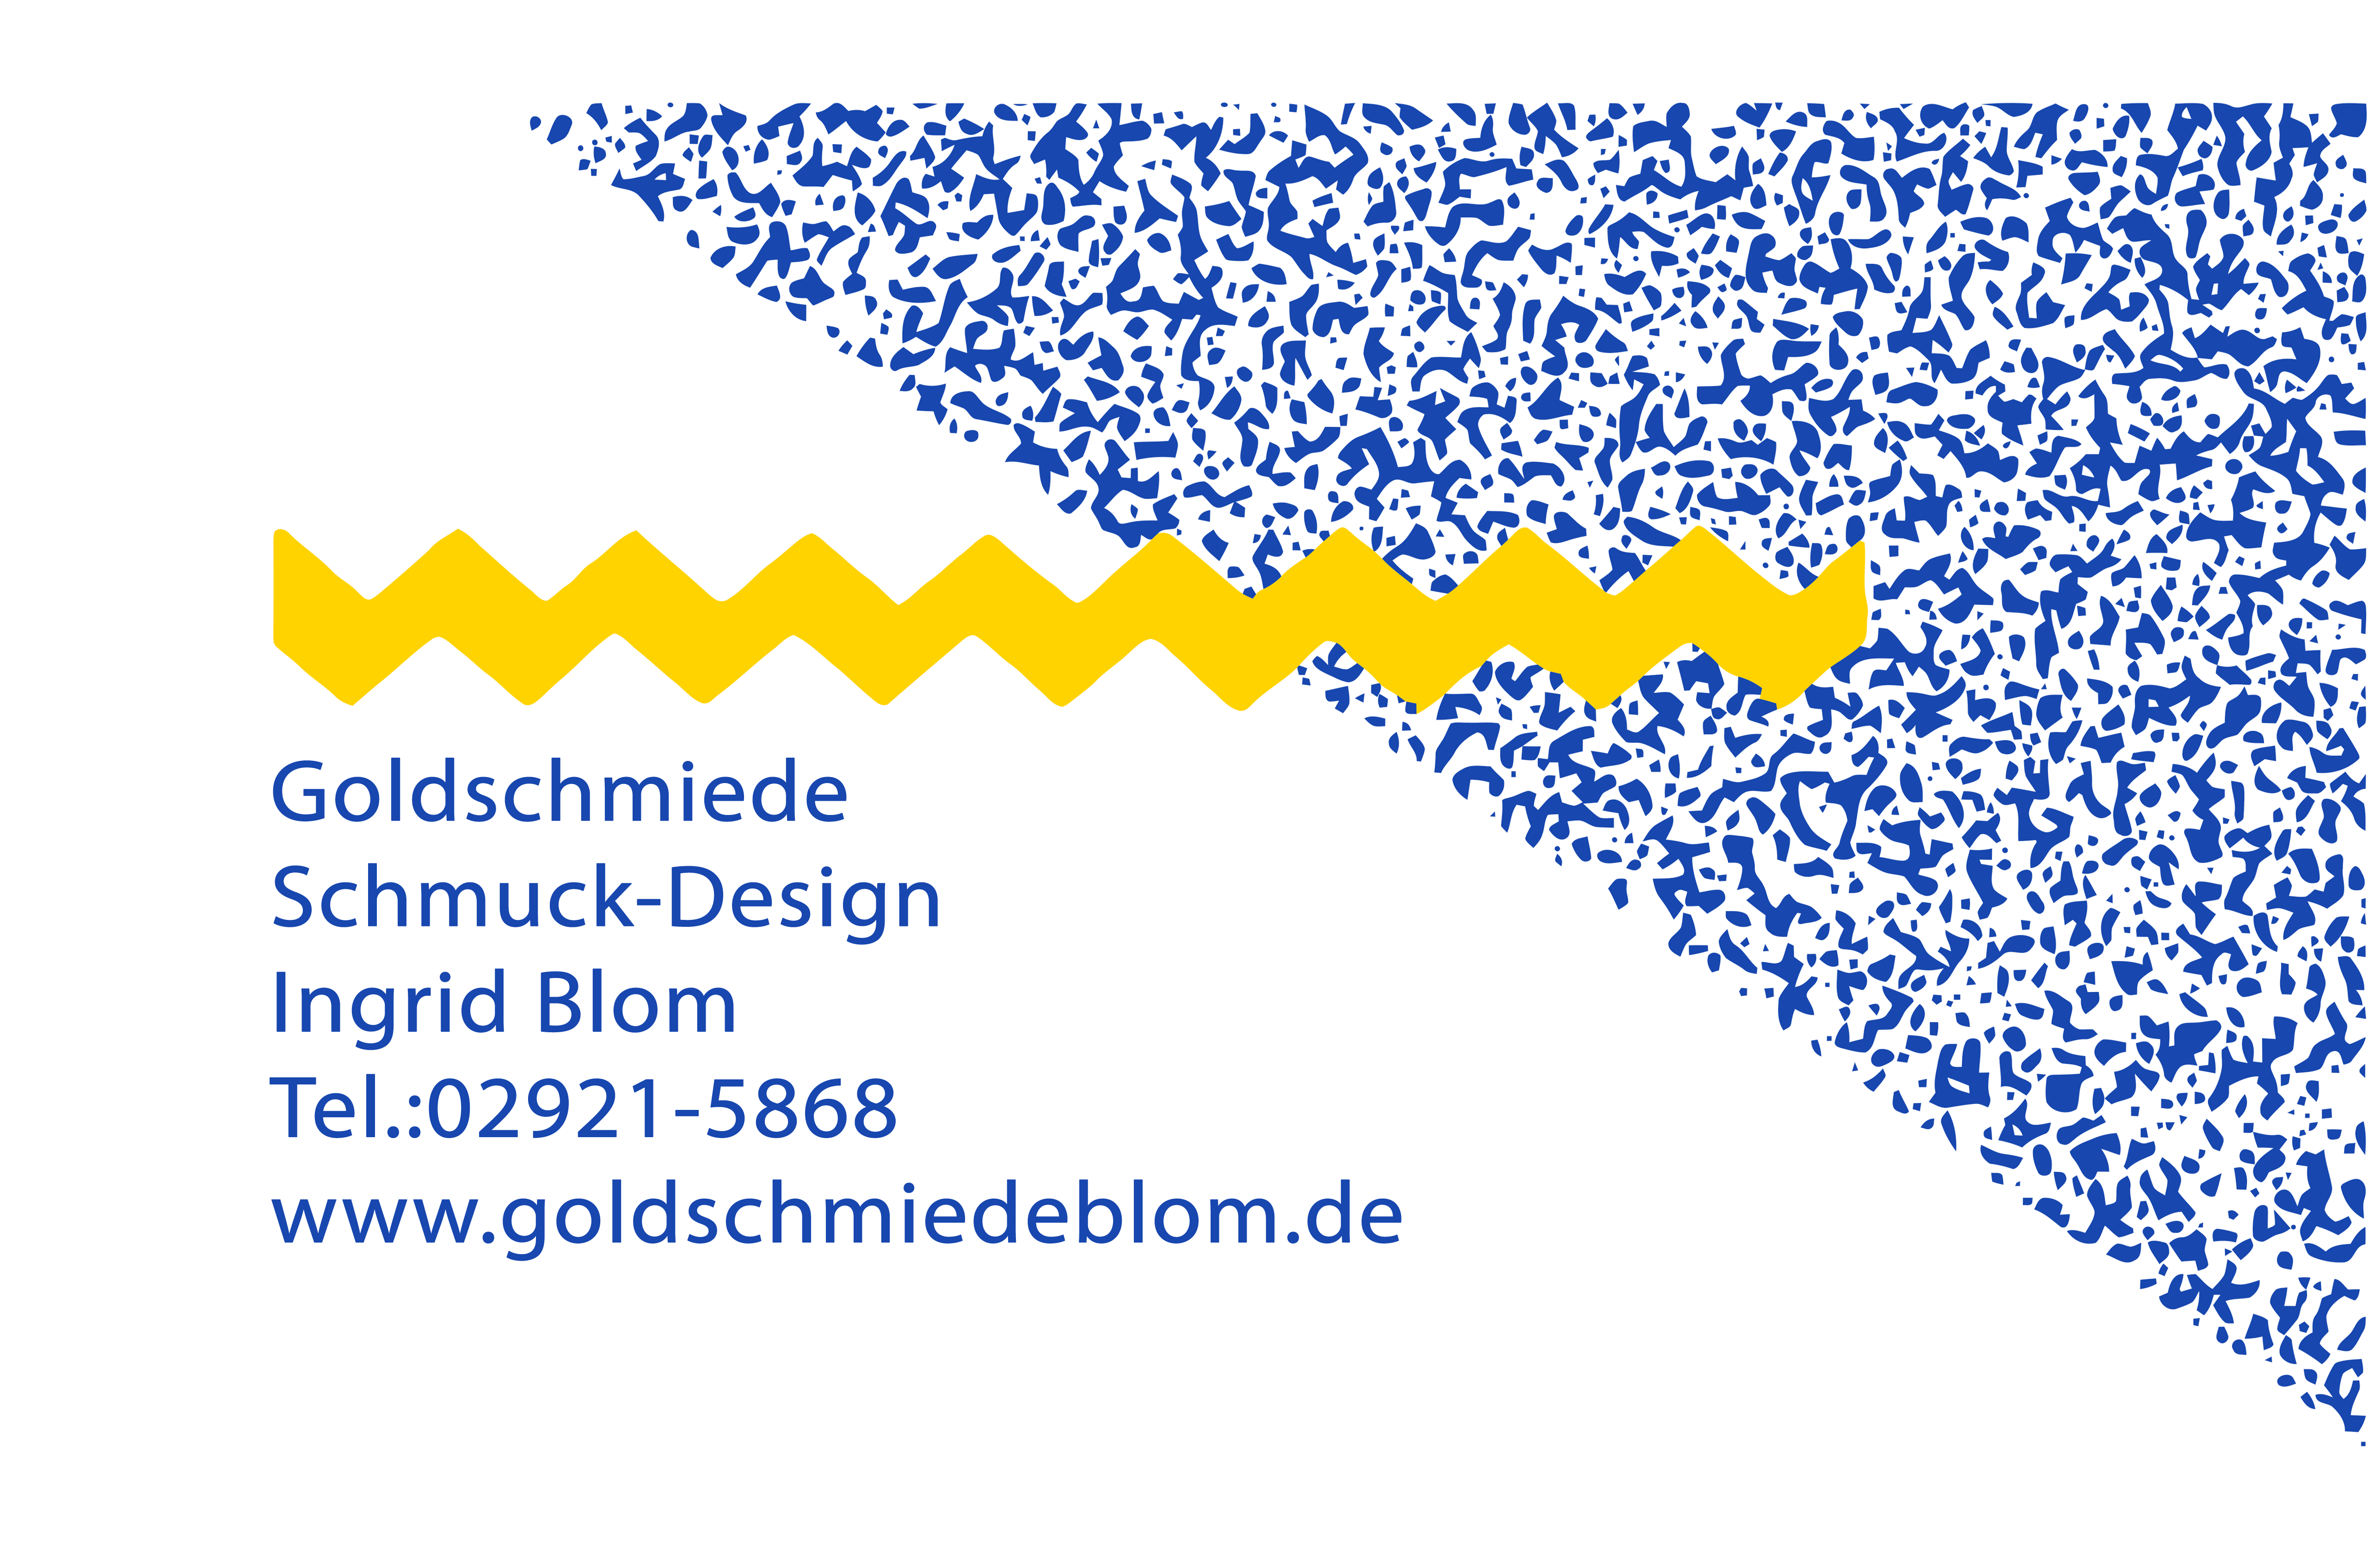 Goldschmiede-Schmuckdesign Blom